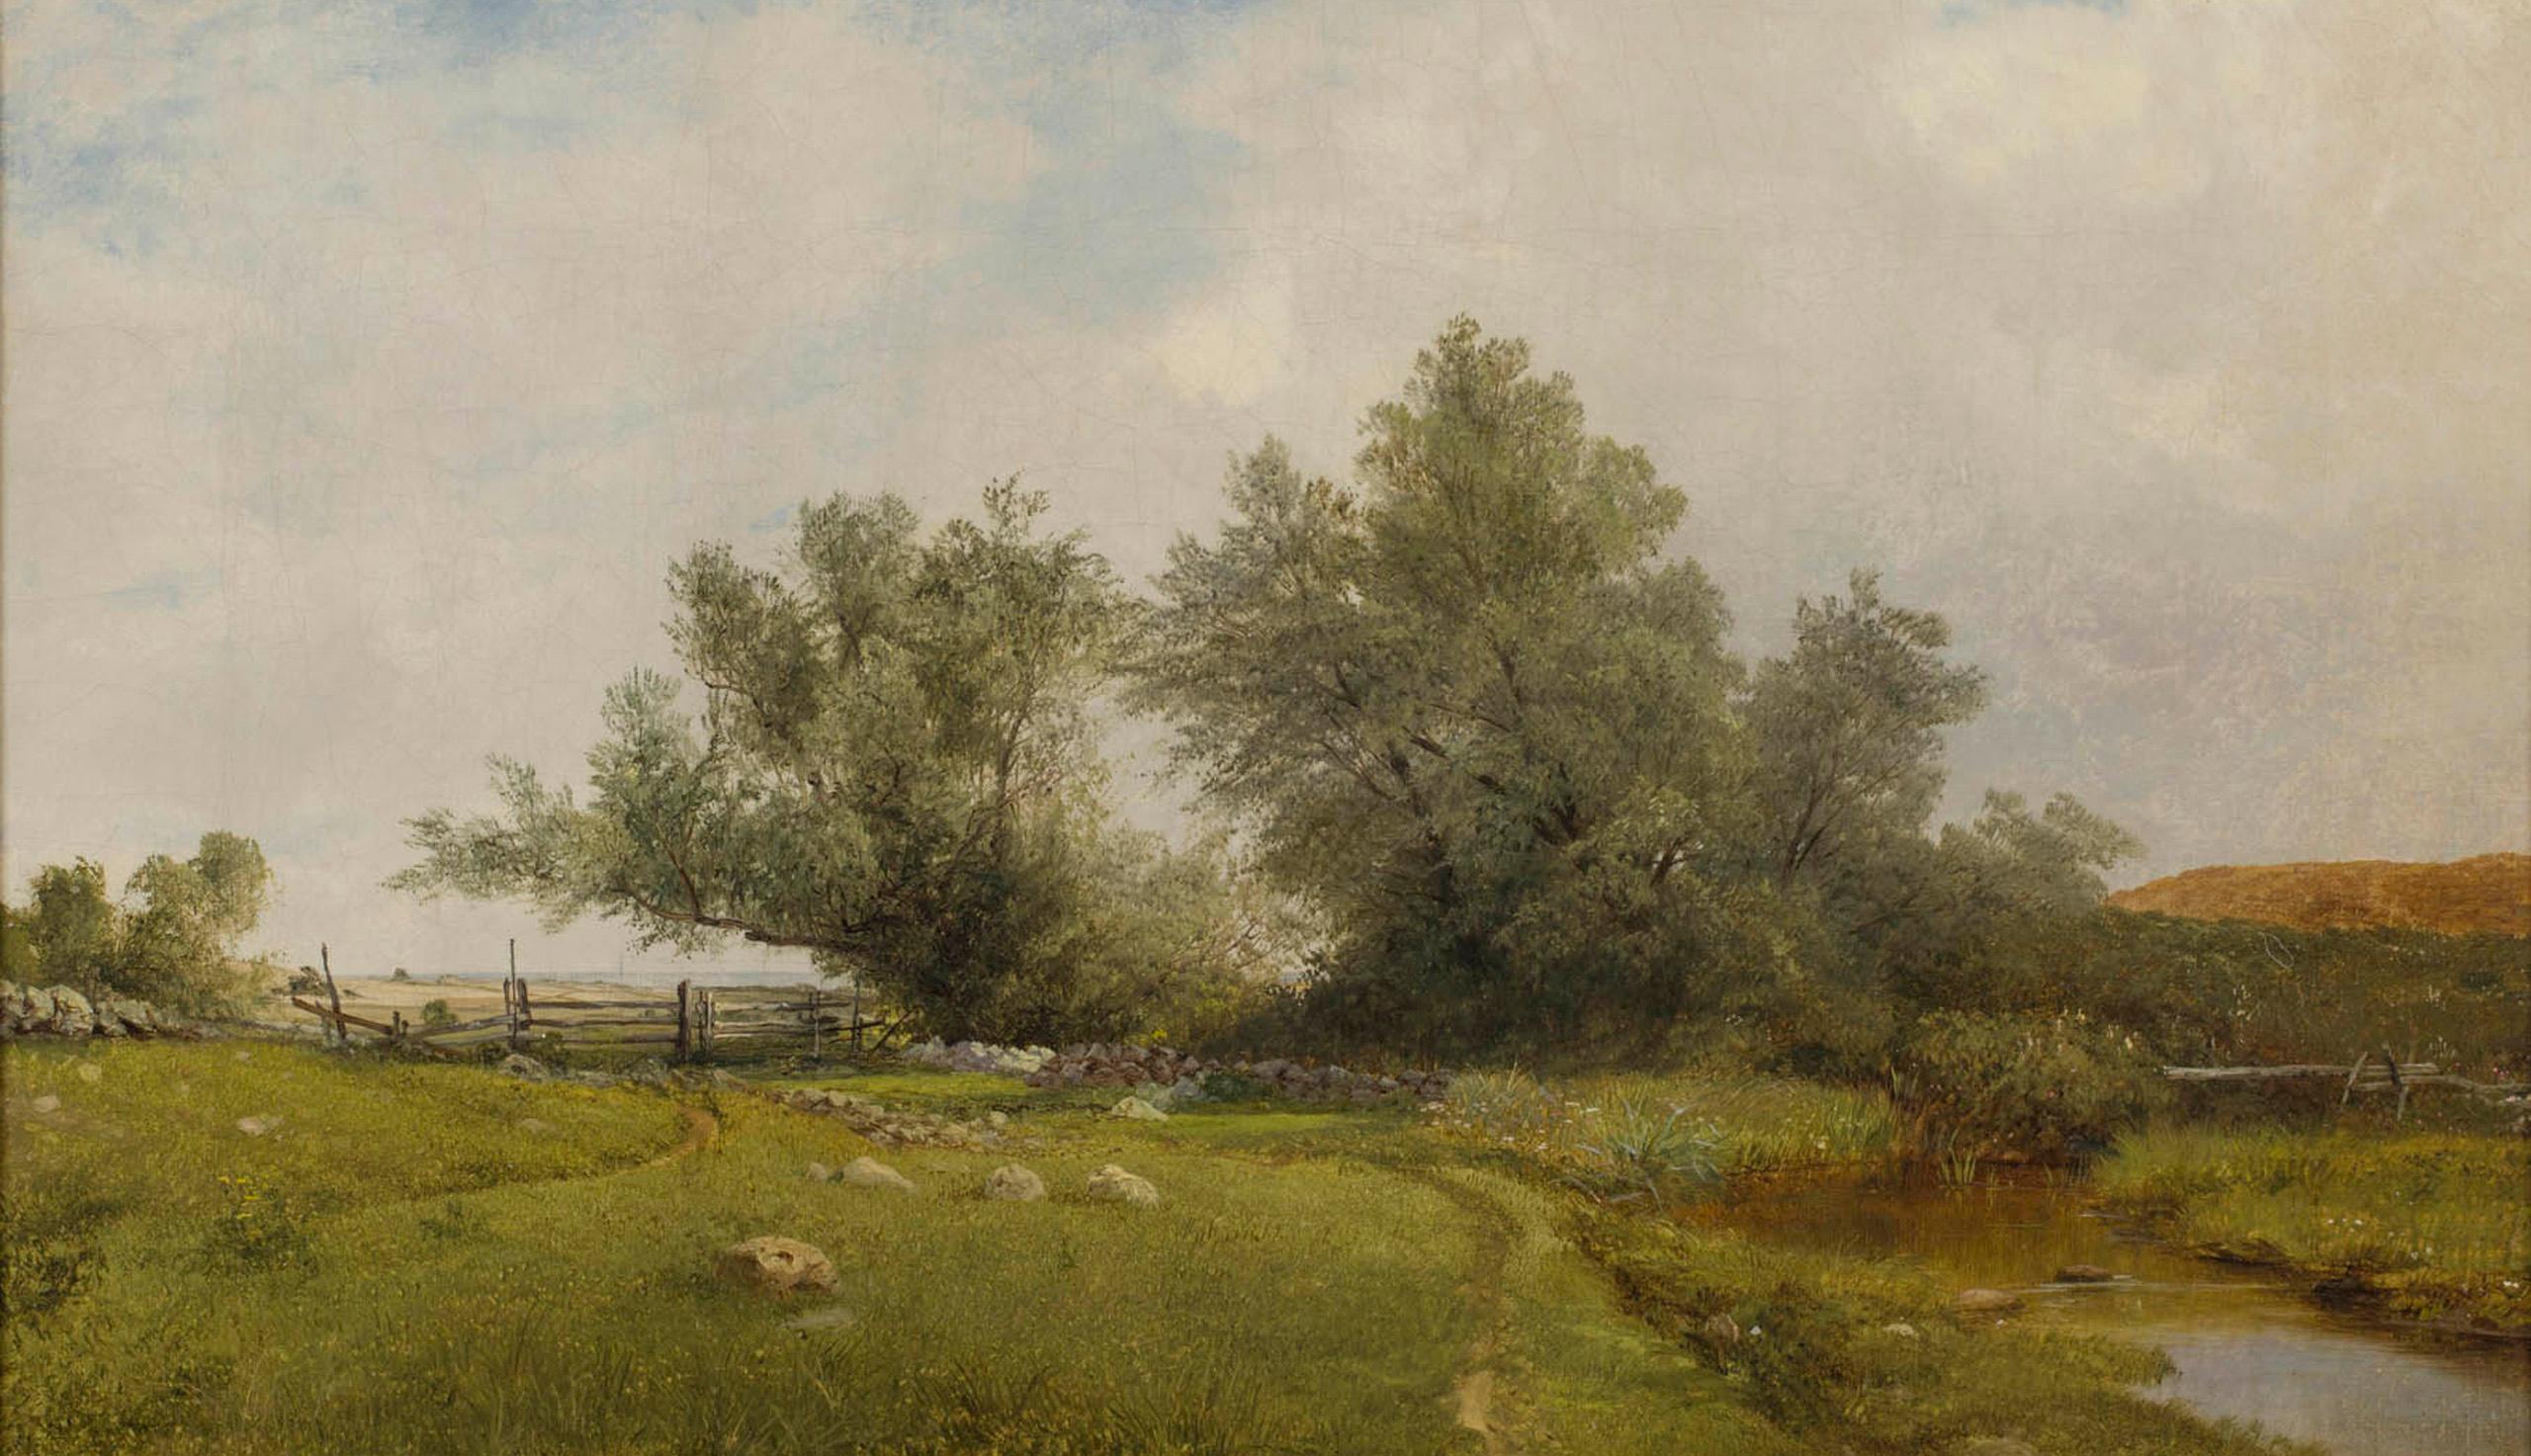 Rhode Island Meadow, Landscape by John Frederick Kensett (1816-1872, American)

John Frederick Kensett (1816-1872)
Rhode Island Meadow
Oil on canvas
14 x 24 inches

